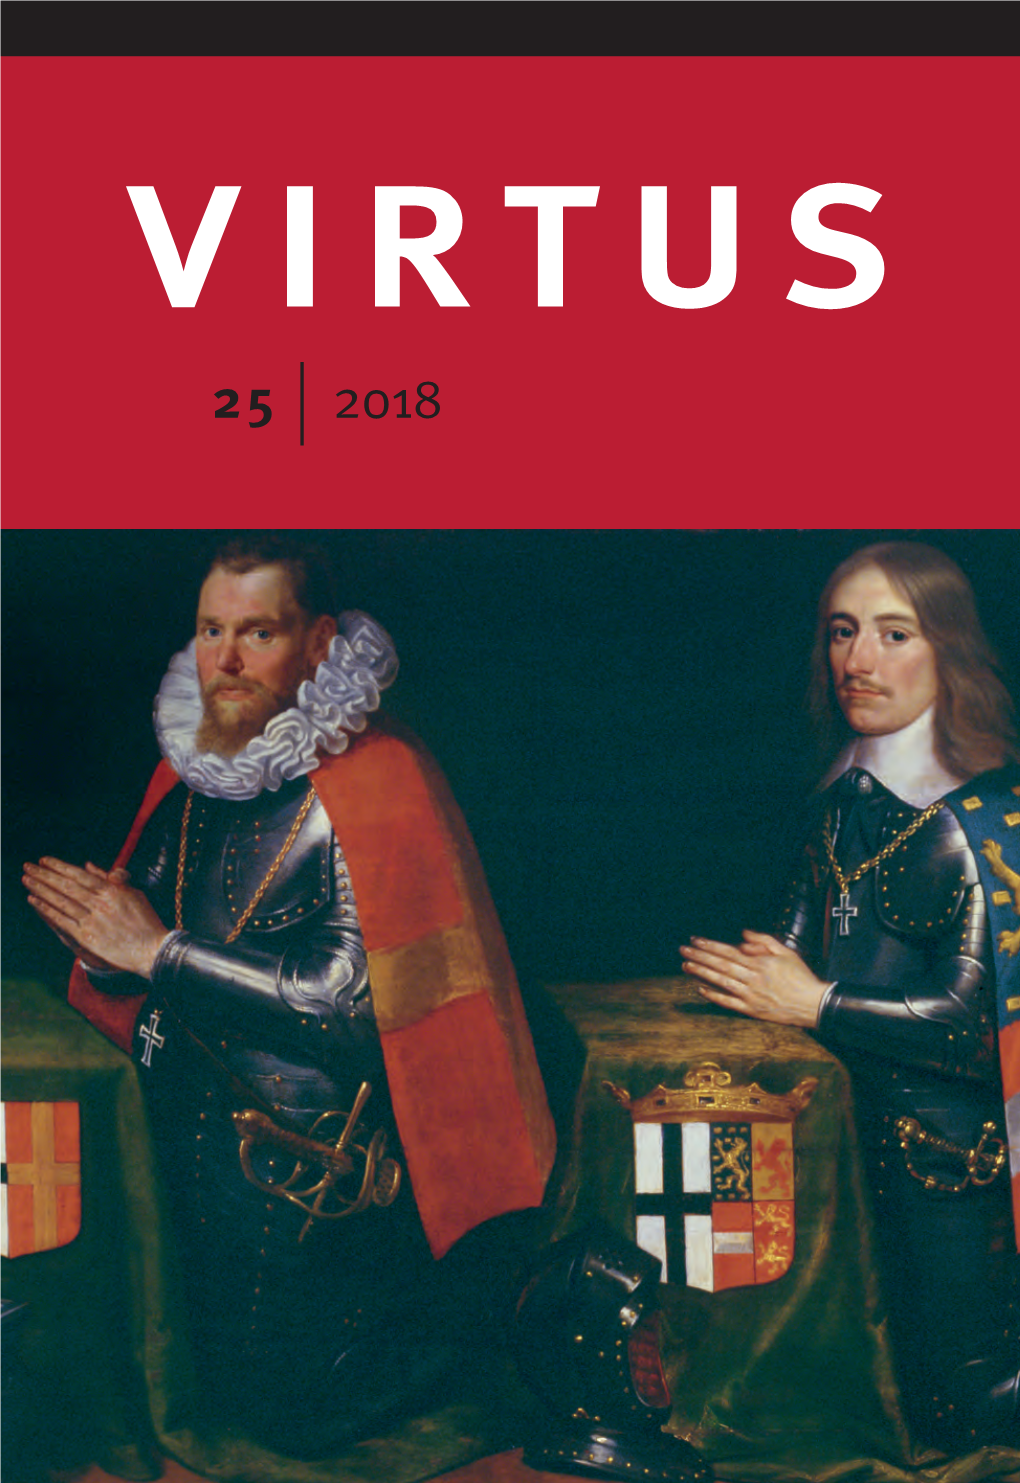 Virtus 2018 Binnenwerk.Indb 57 14-02-19 09:03 Virtus 25 | 2018